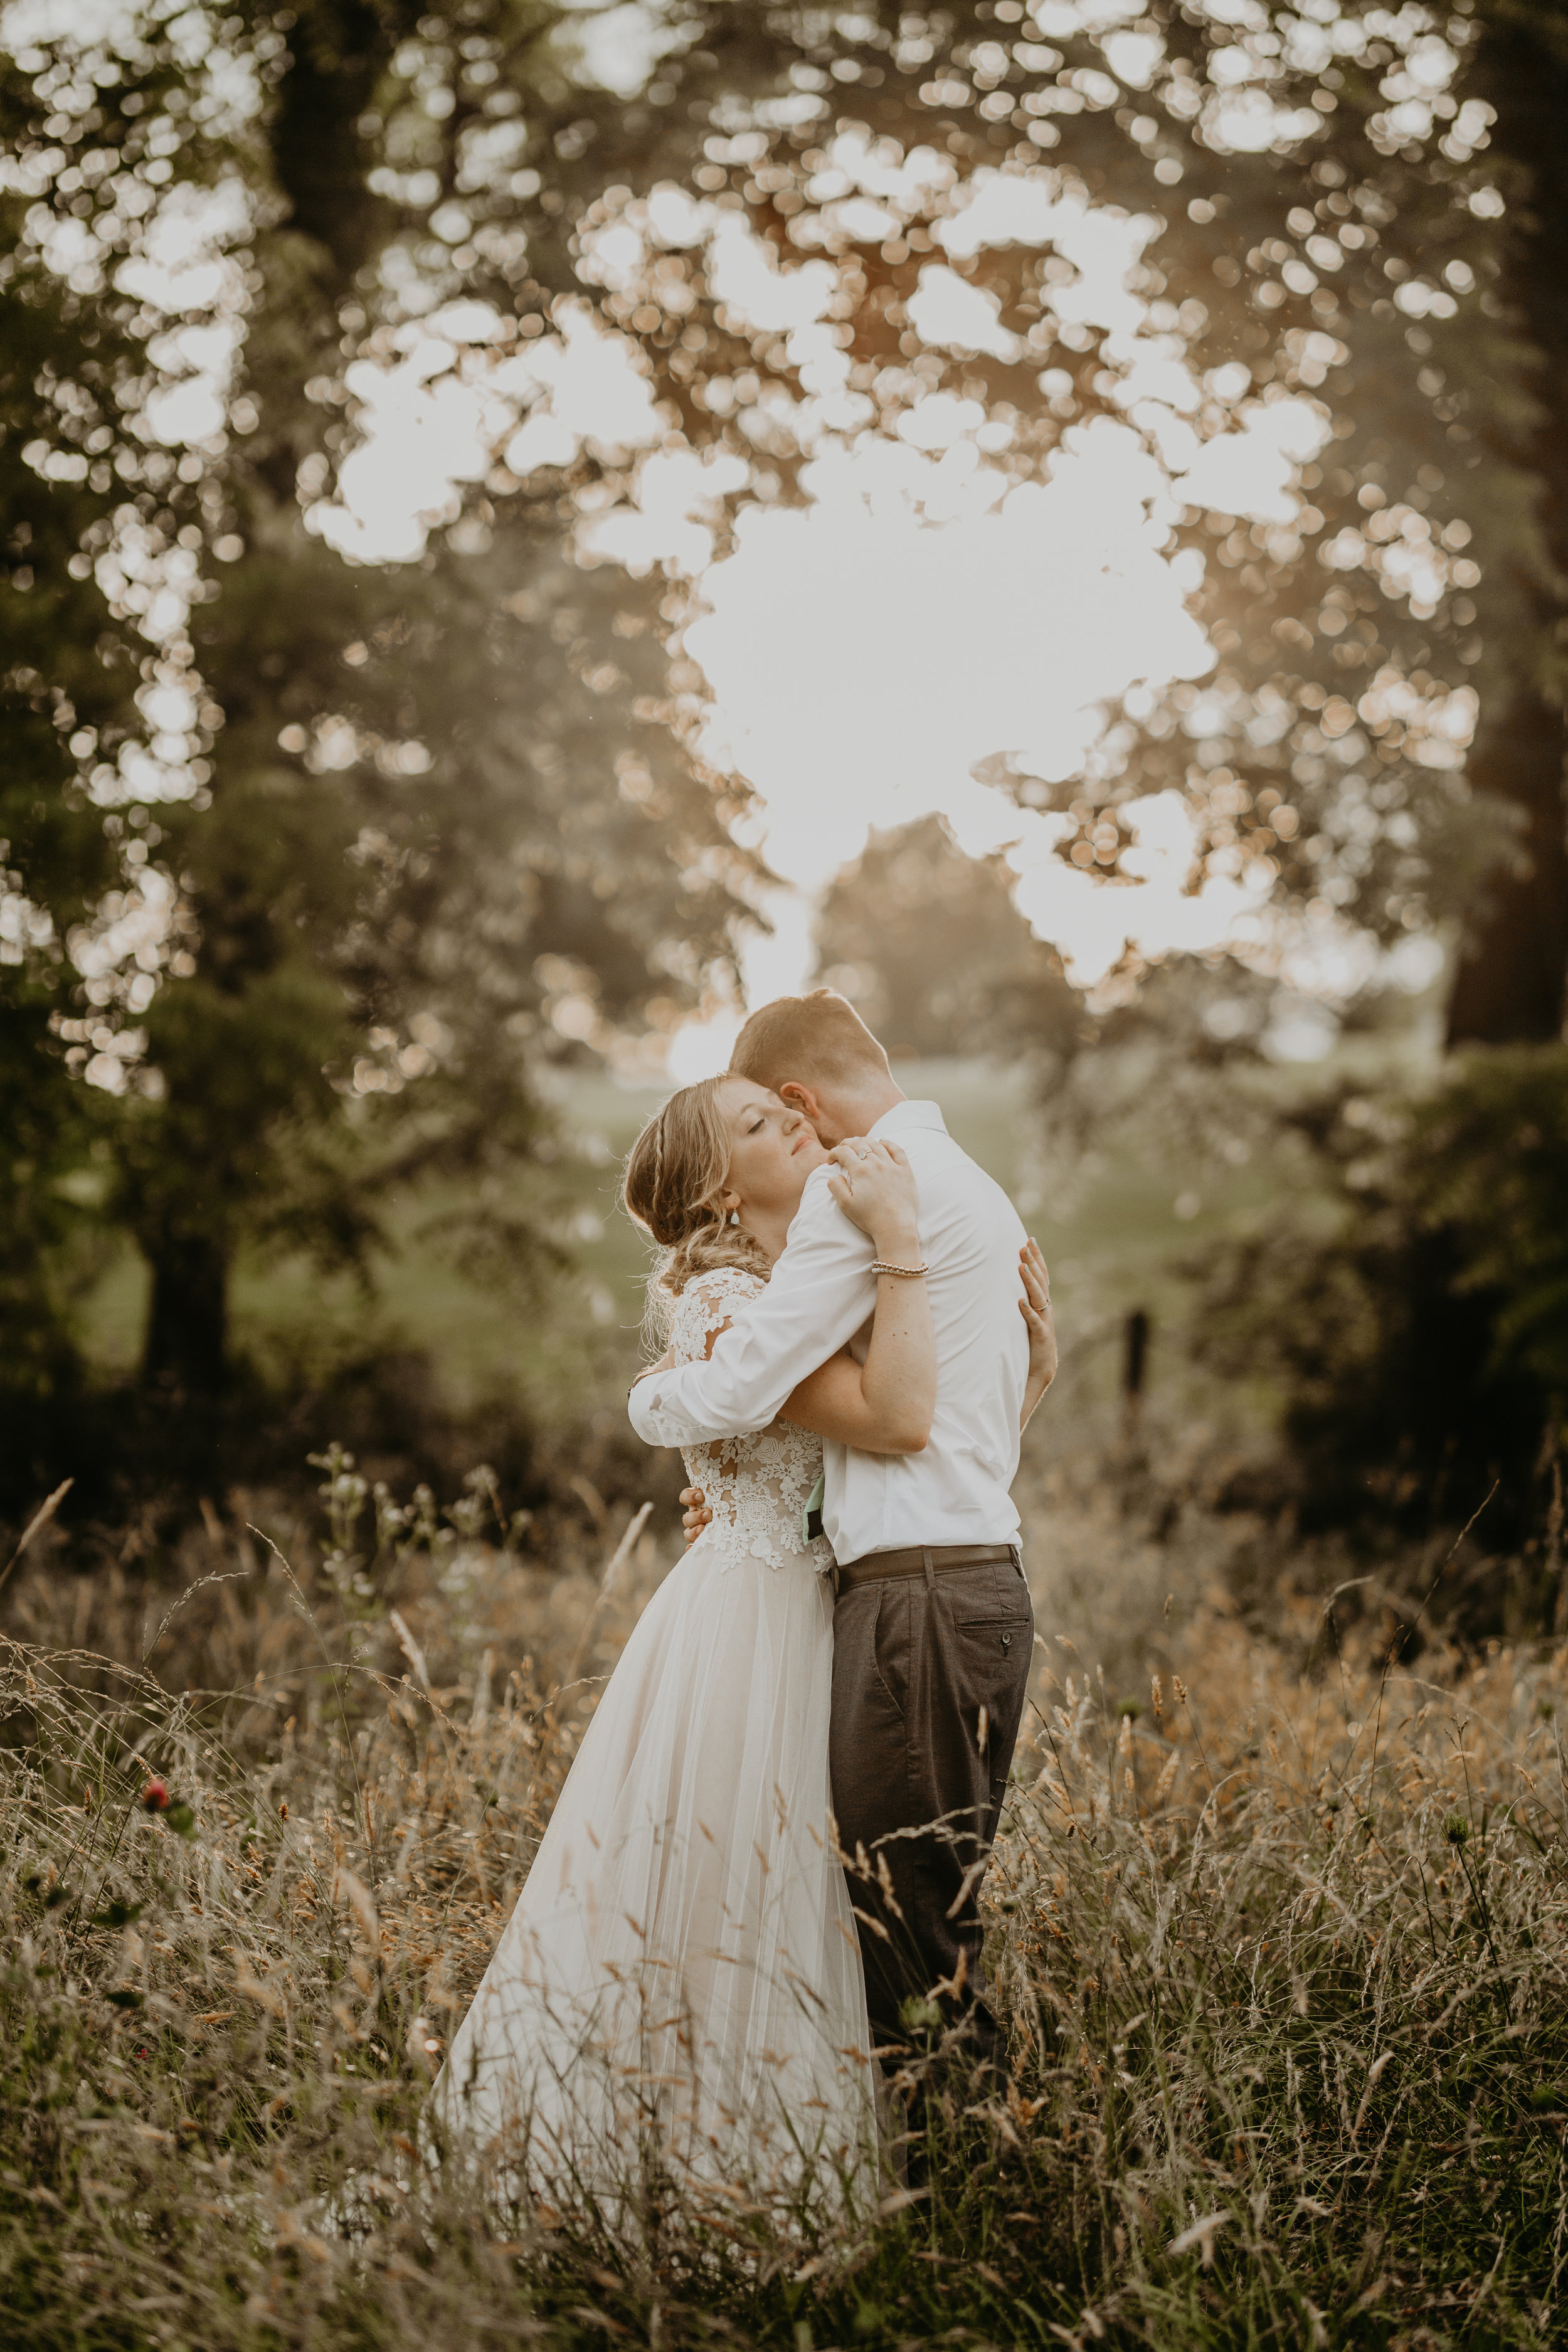 Nicole-Daacke-Photography-pennsylvania-laid-back-outside-backyard-wedding-family-summer-june-maryland-barefoot-bride-woodland-trees-sunset-couple-78.jpg